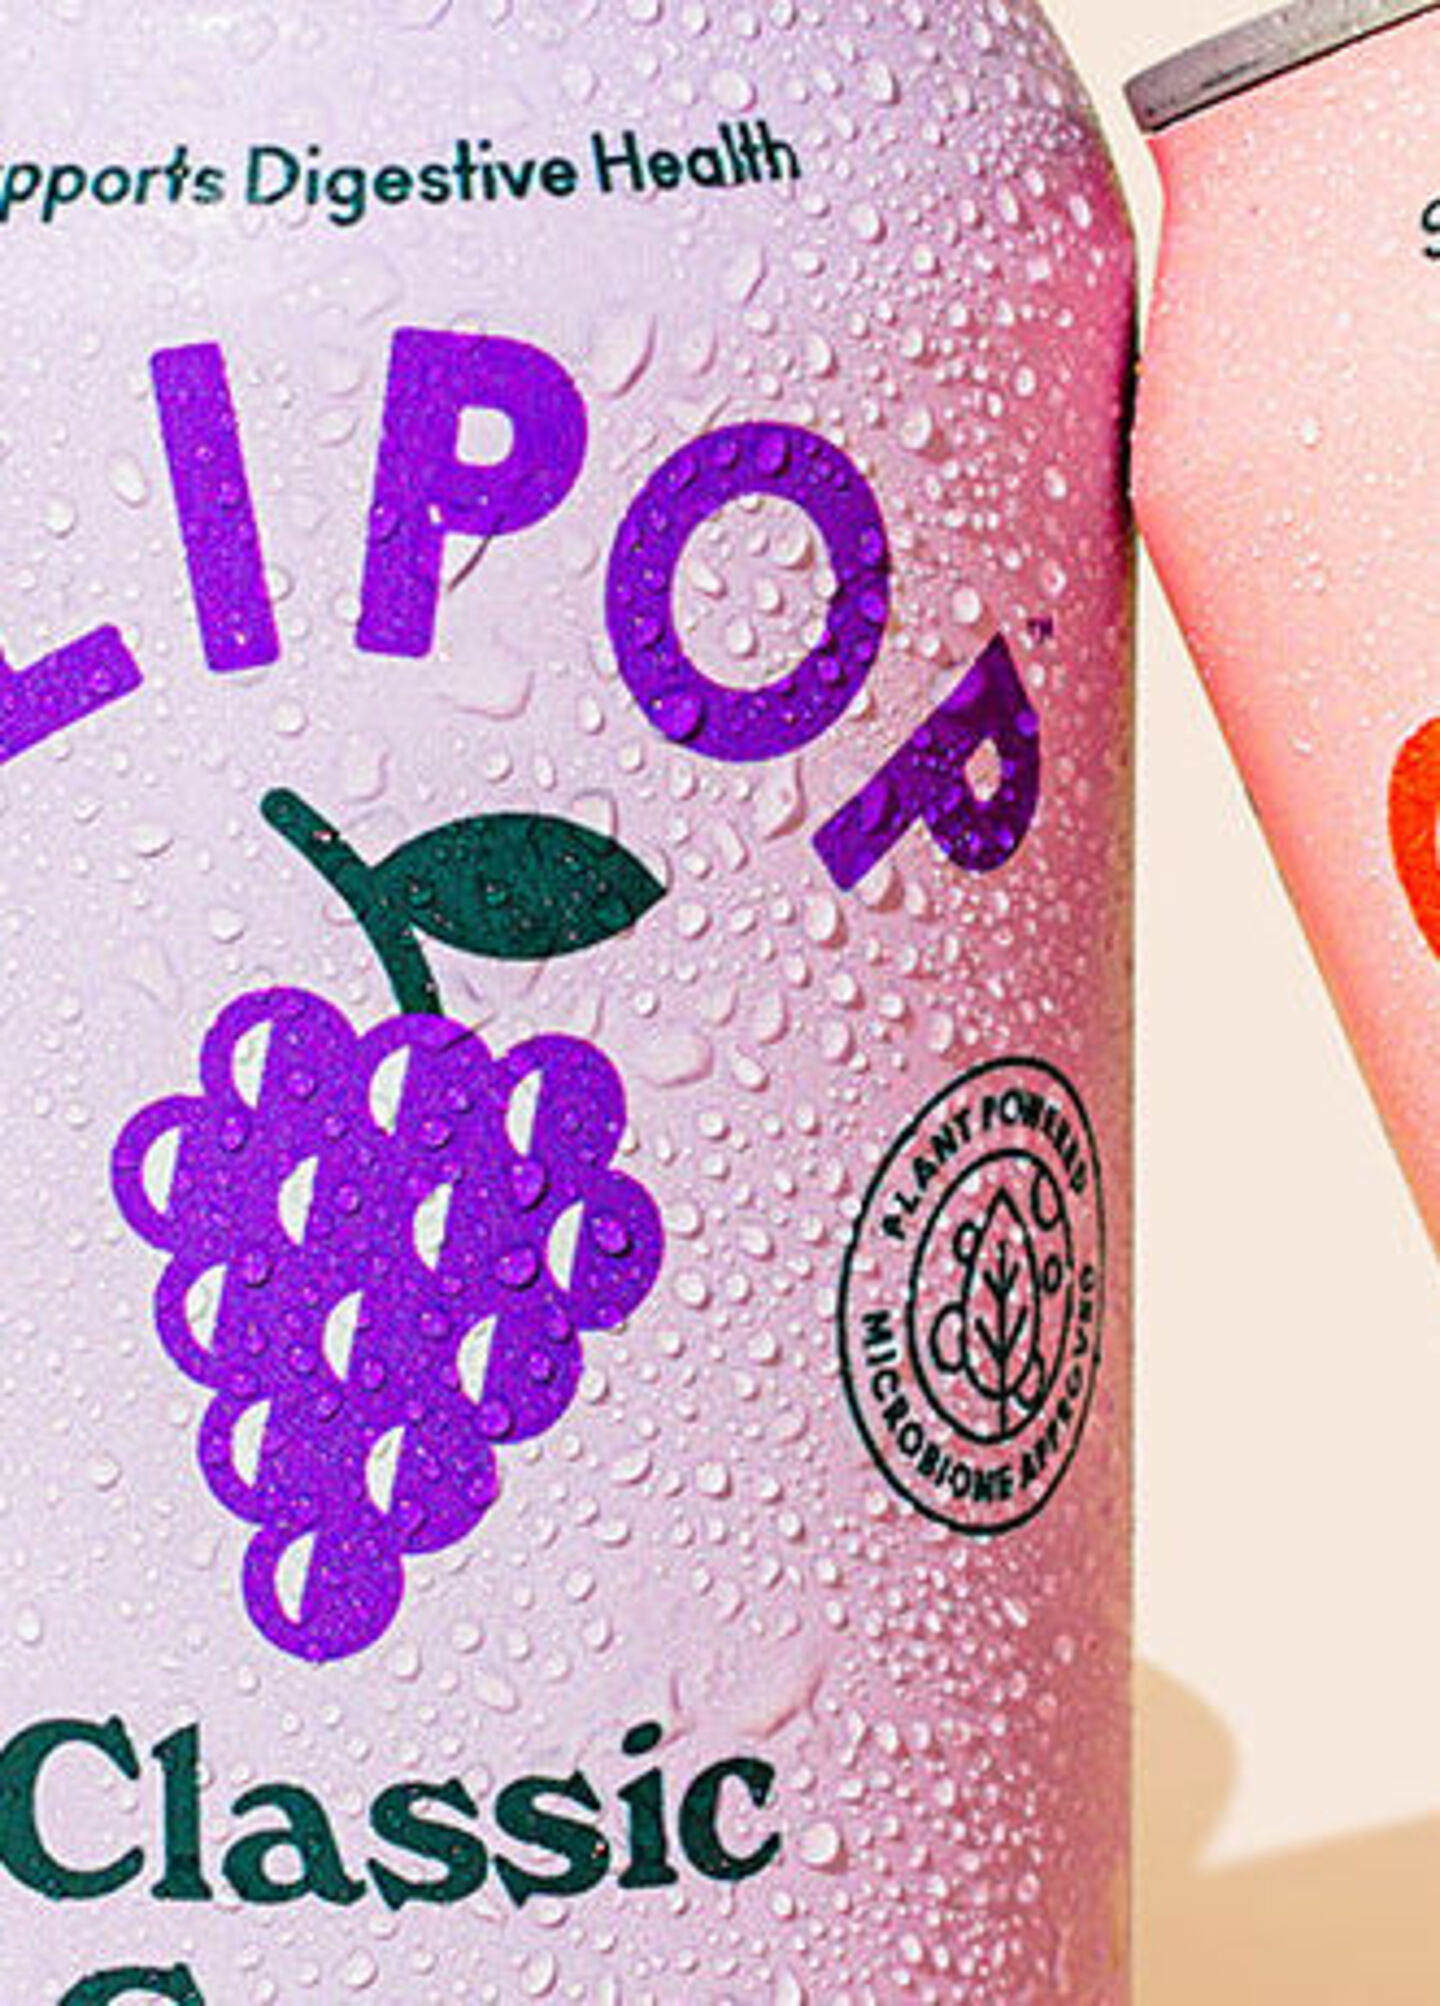 soda cans from company Olipop